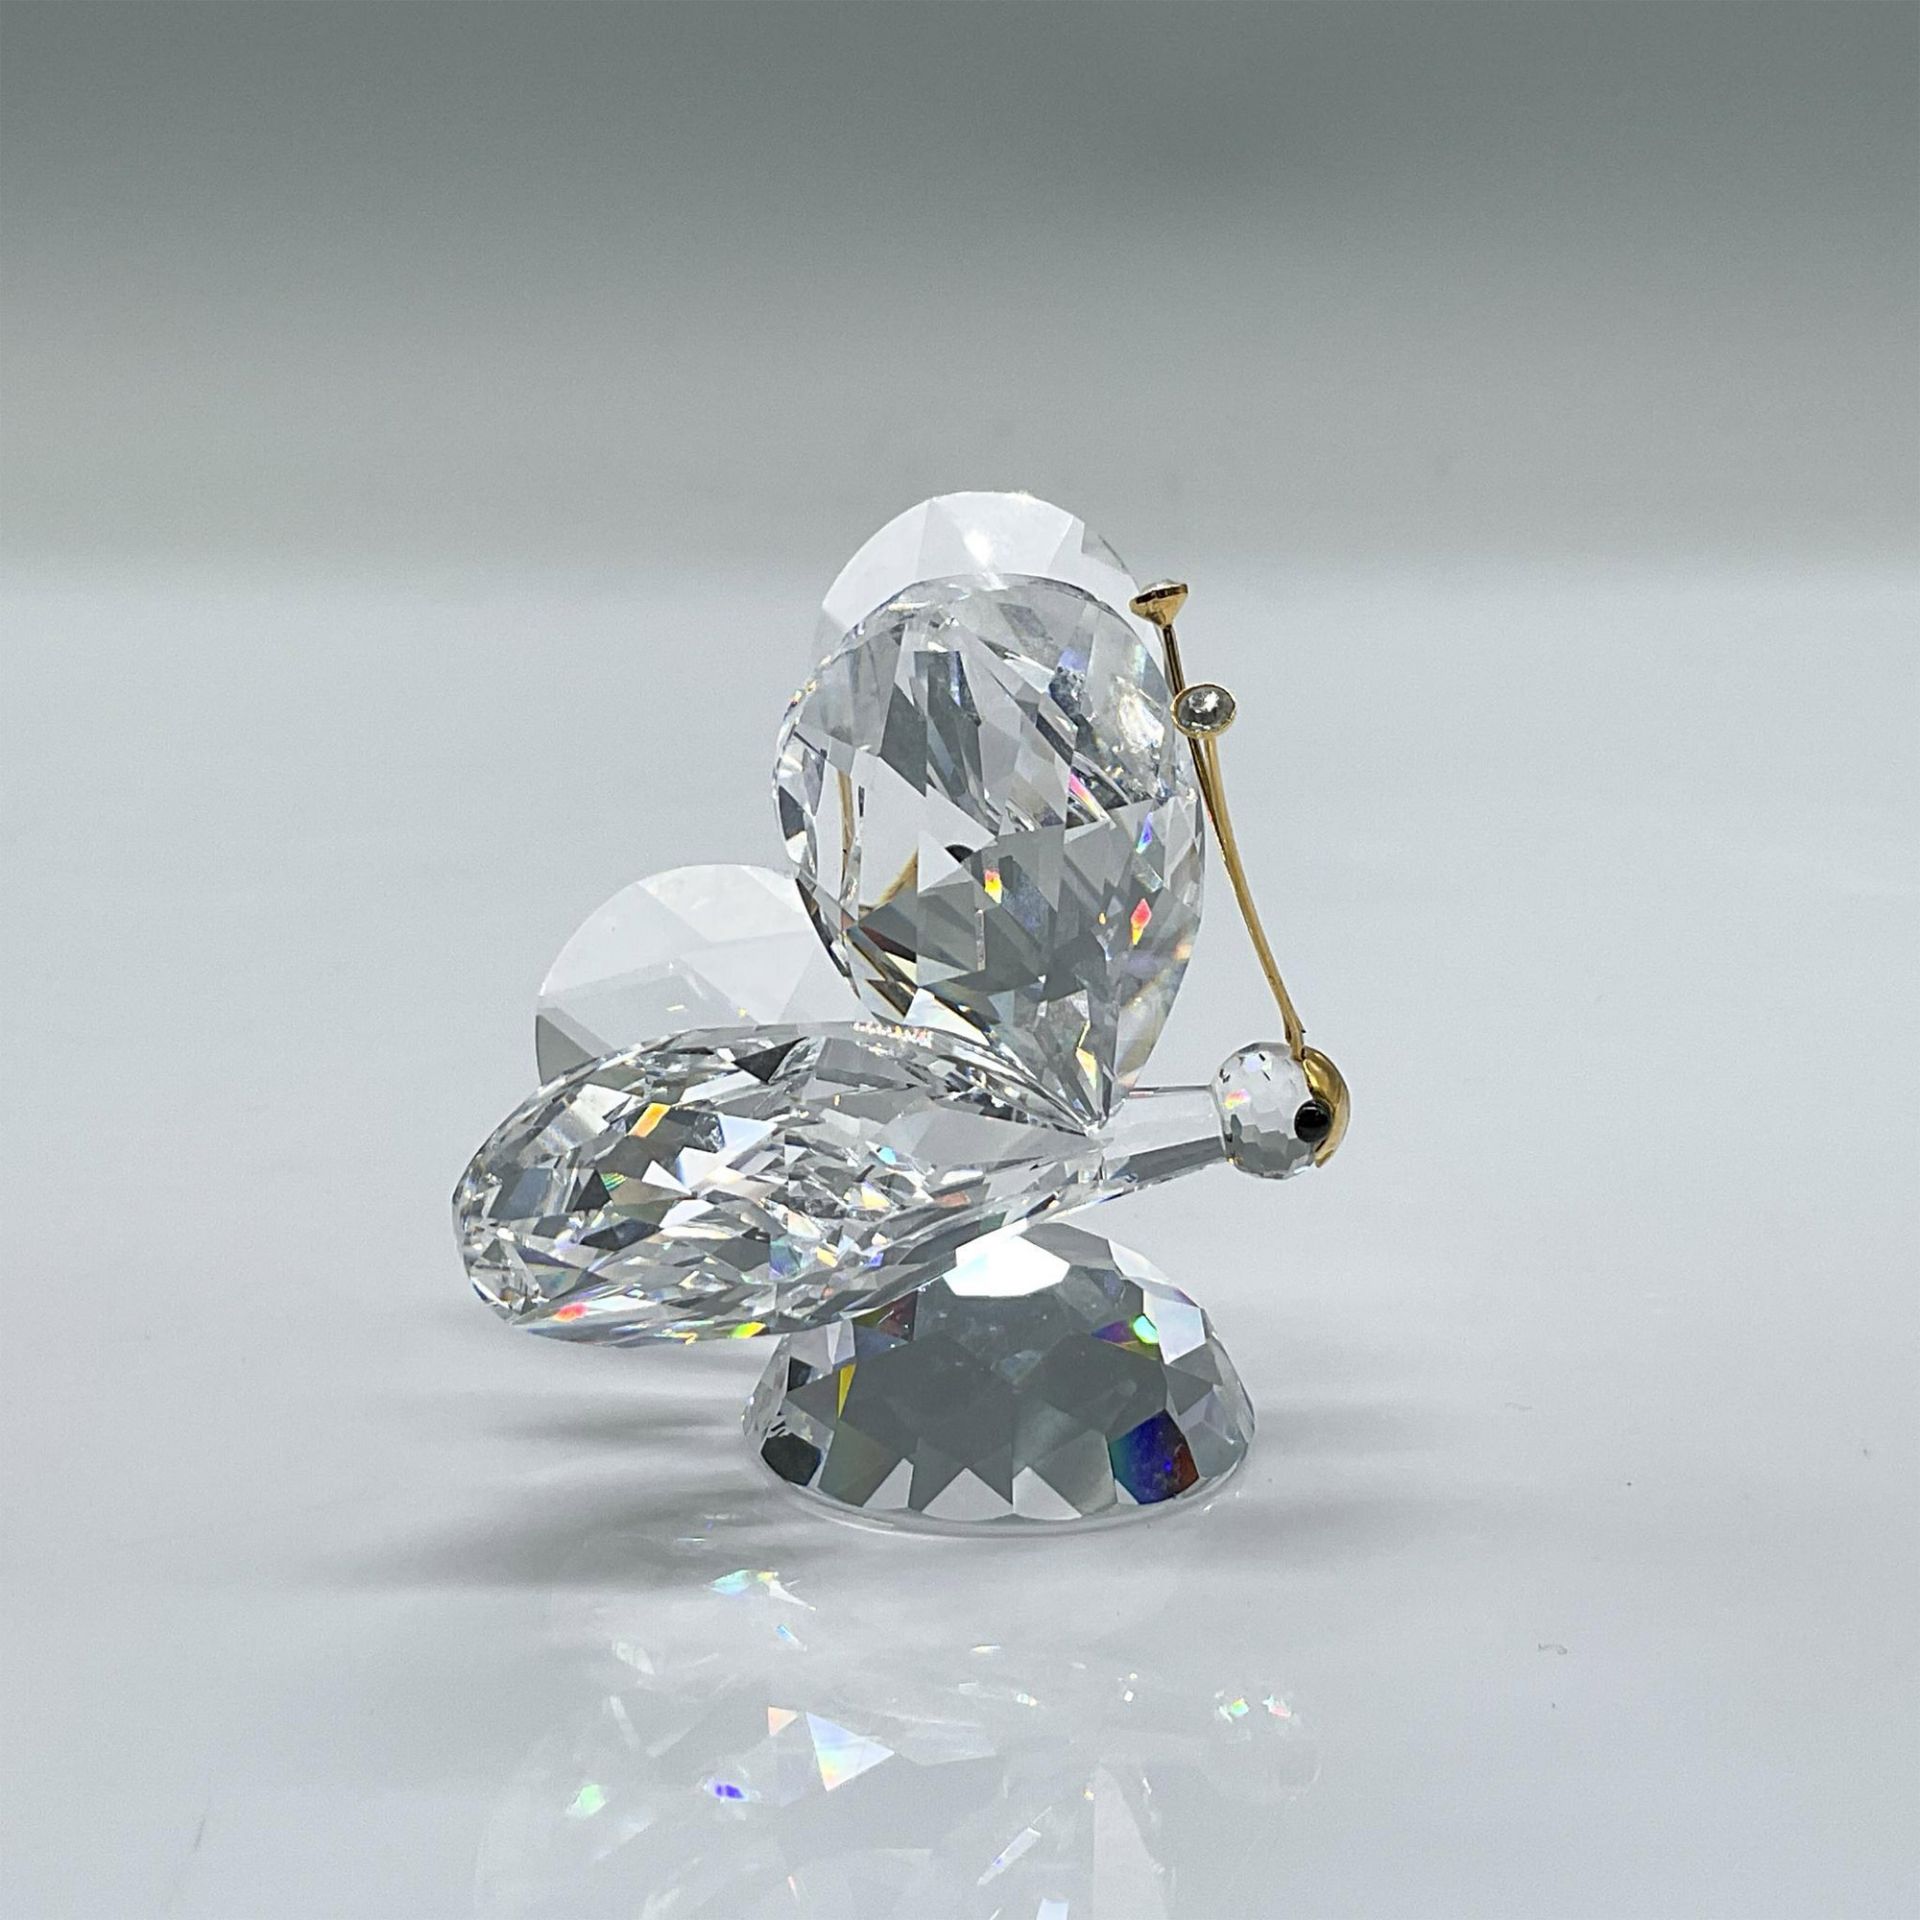 Swarovski Crystal Figurine, Butterfly - Image 2 of 5